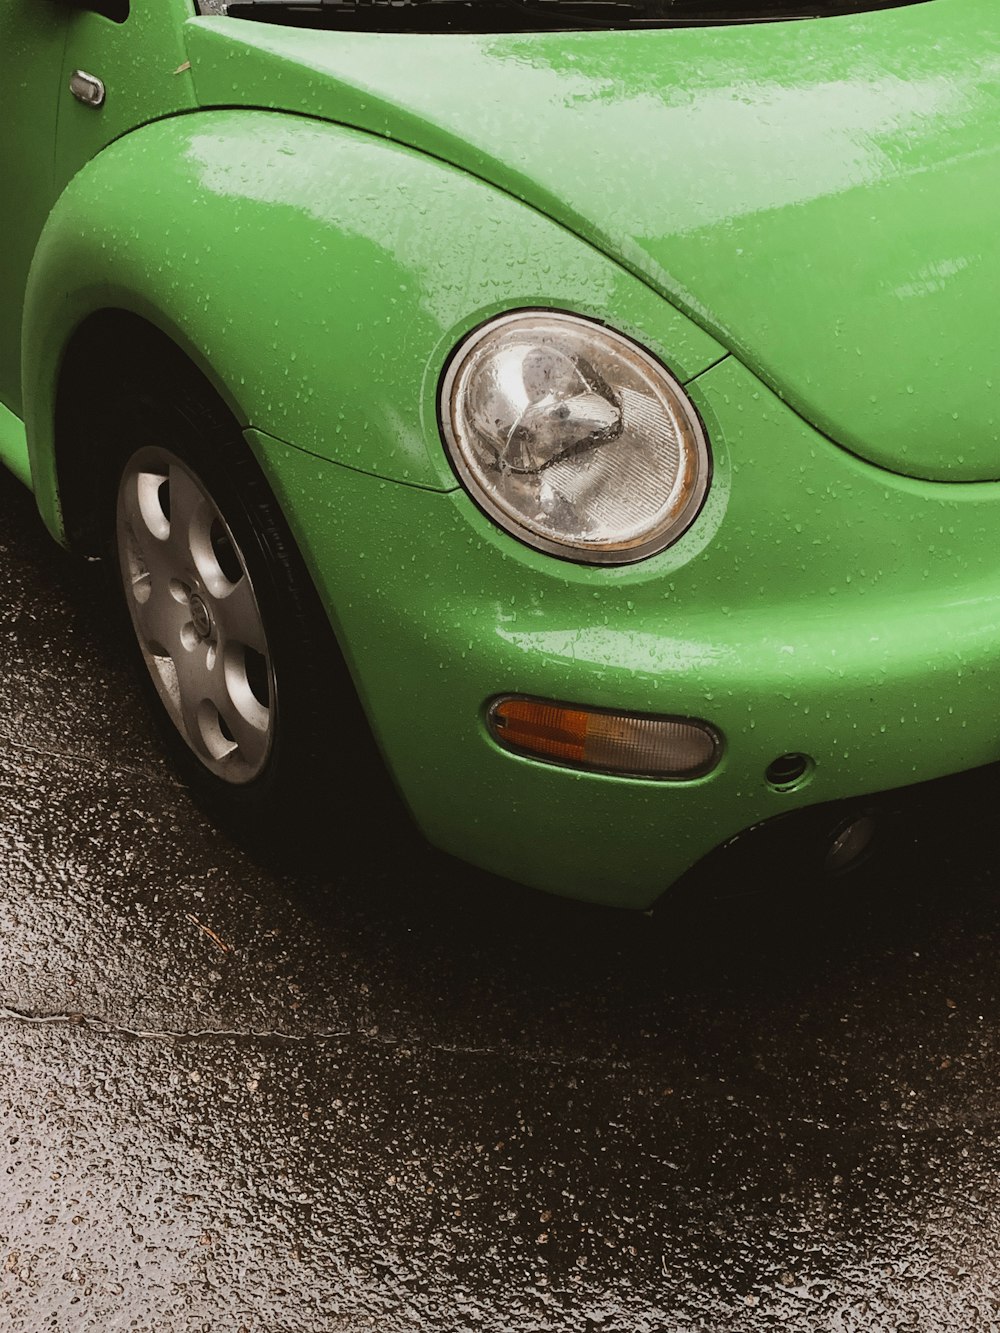 green car on gray asphalt road